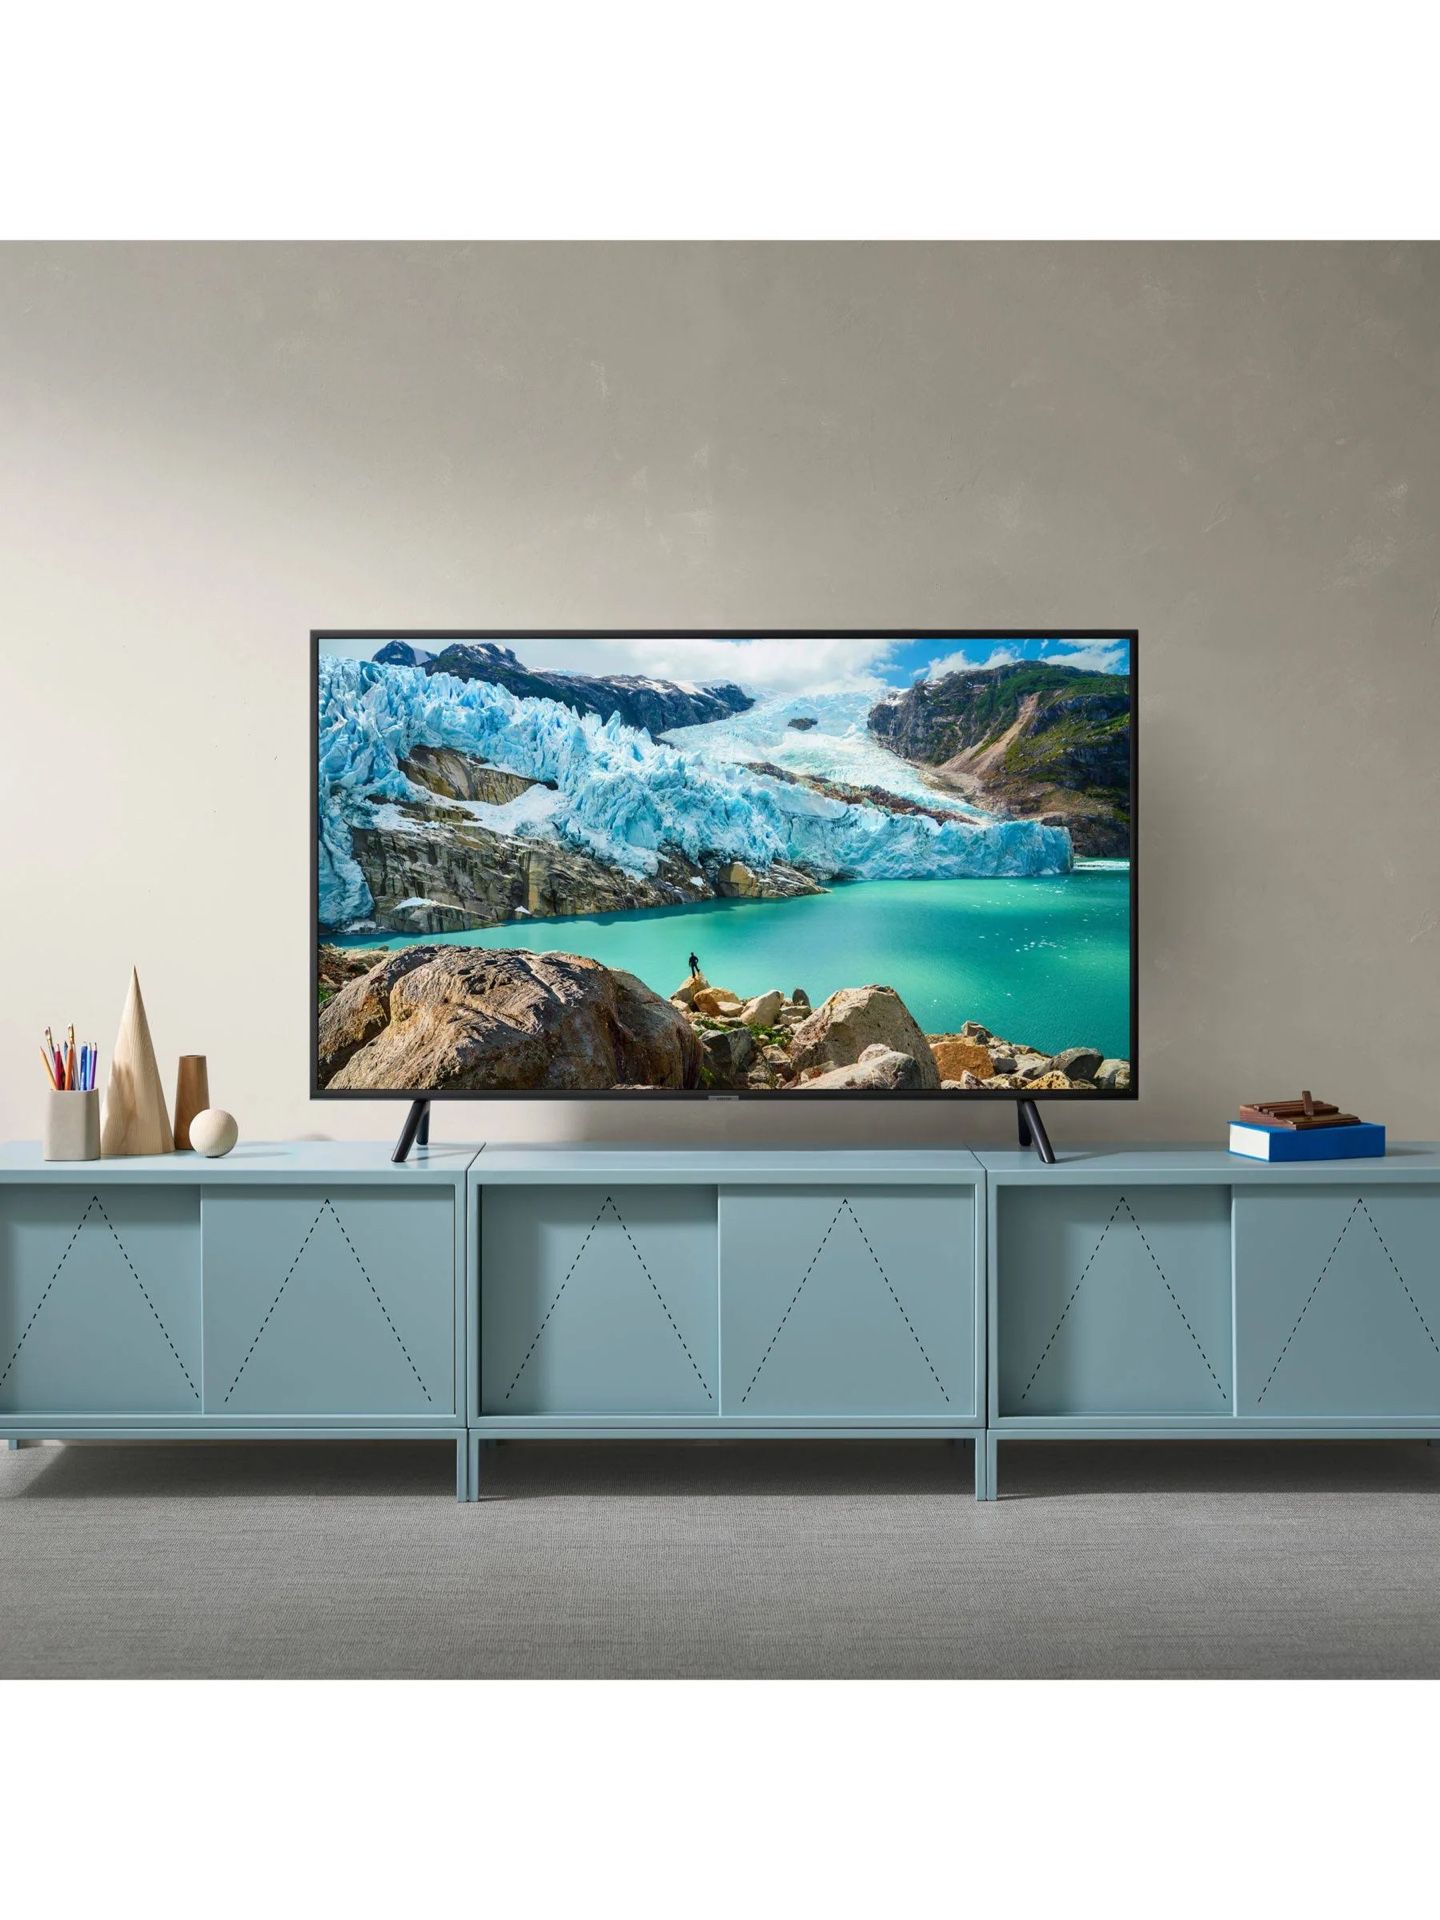 Samsung 65 Inch Smart TV